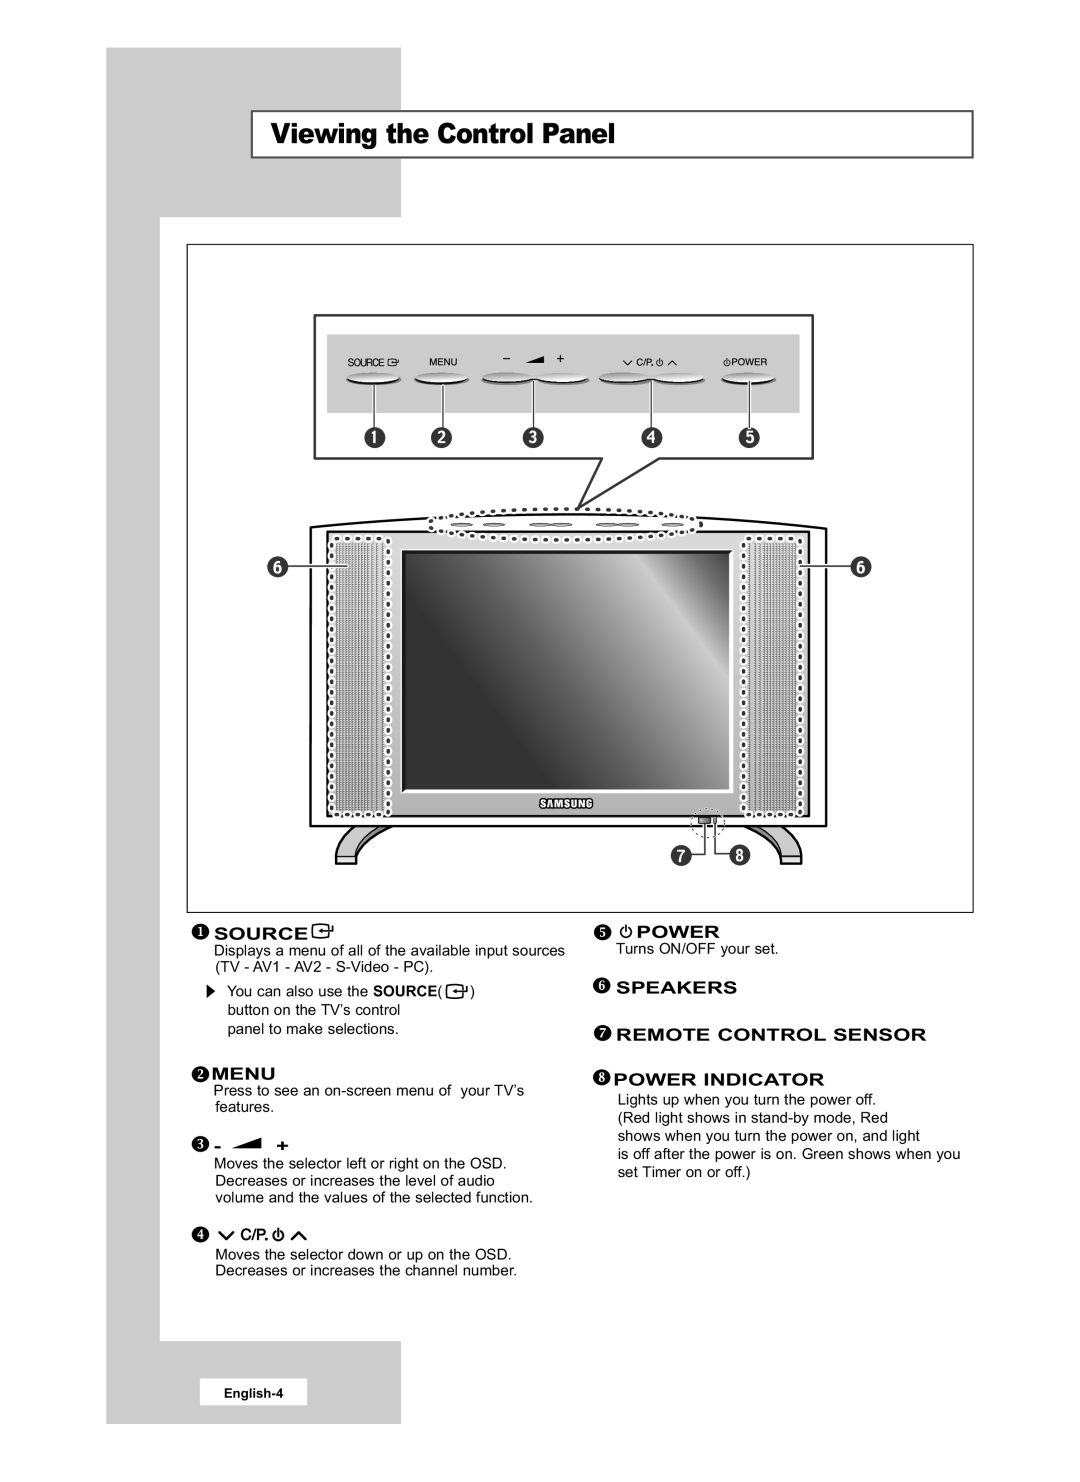 Samsung LE15E31S manual Viewing the Control Panel, Source, Menu, Speakers Remote Control Sensor Power Indicator 